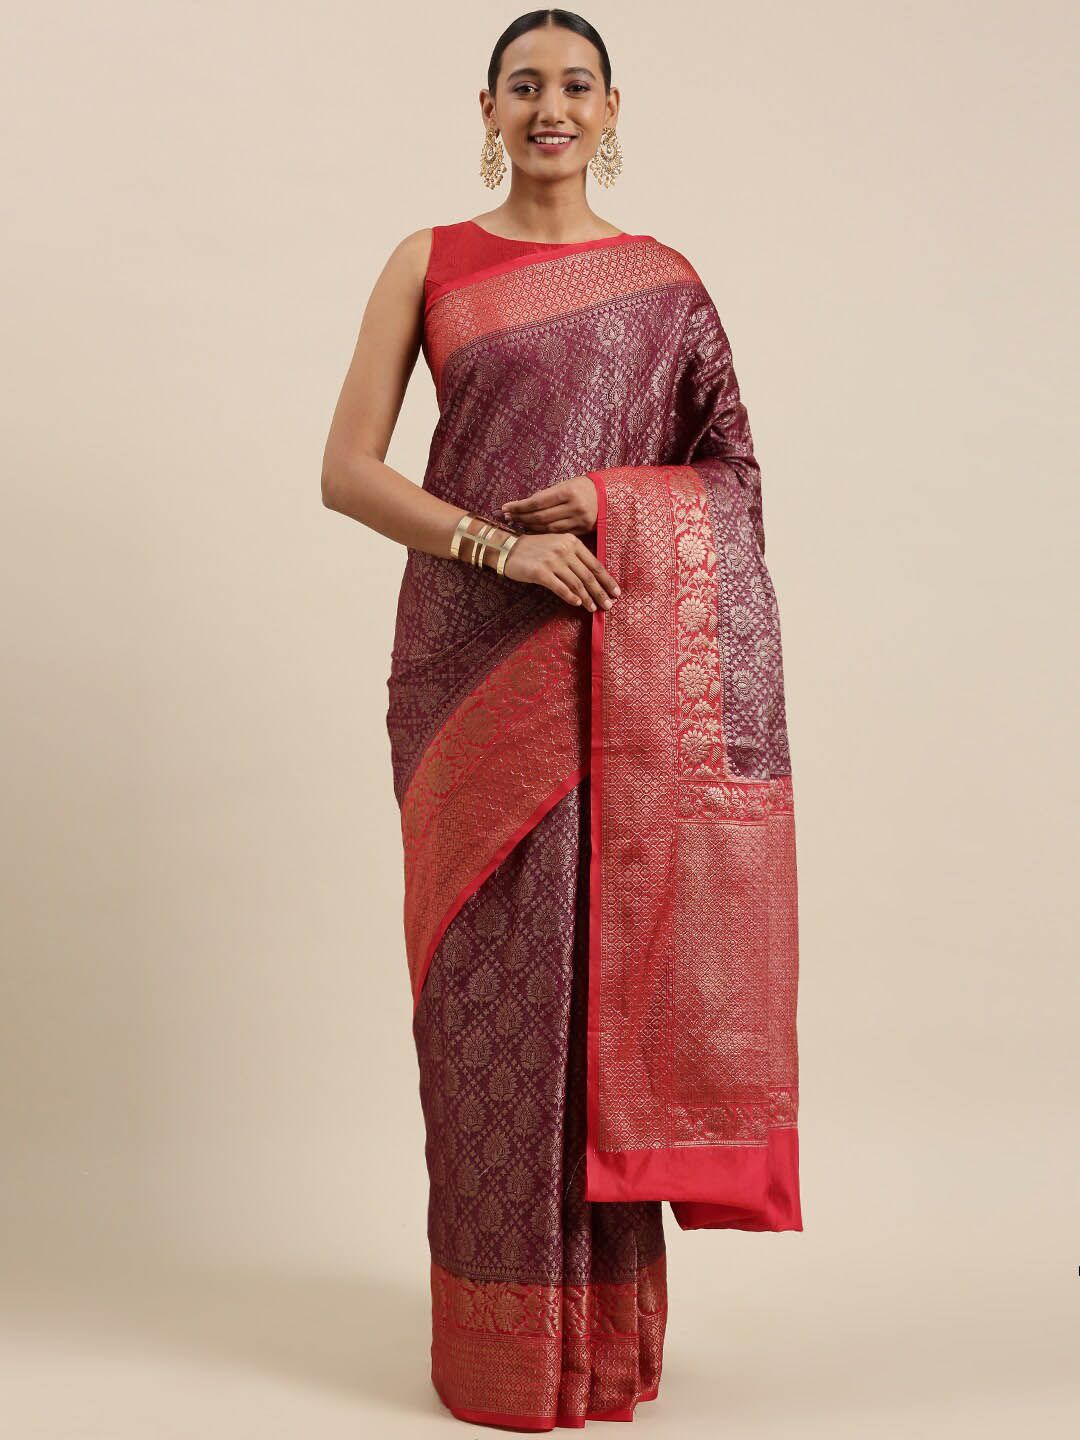 PTIEPL Banarasi Silk Works Ethnic Motifs Woven Design Zari Banarasi Saree Price in India